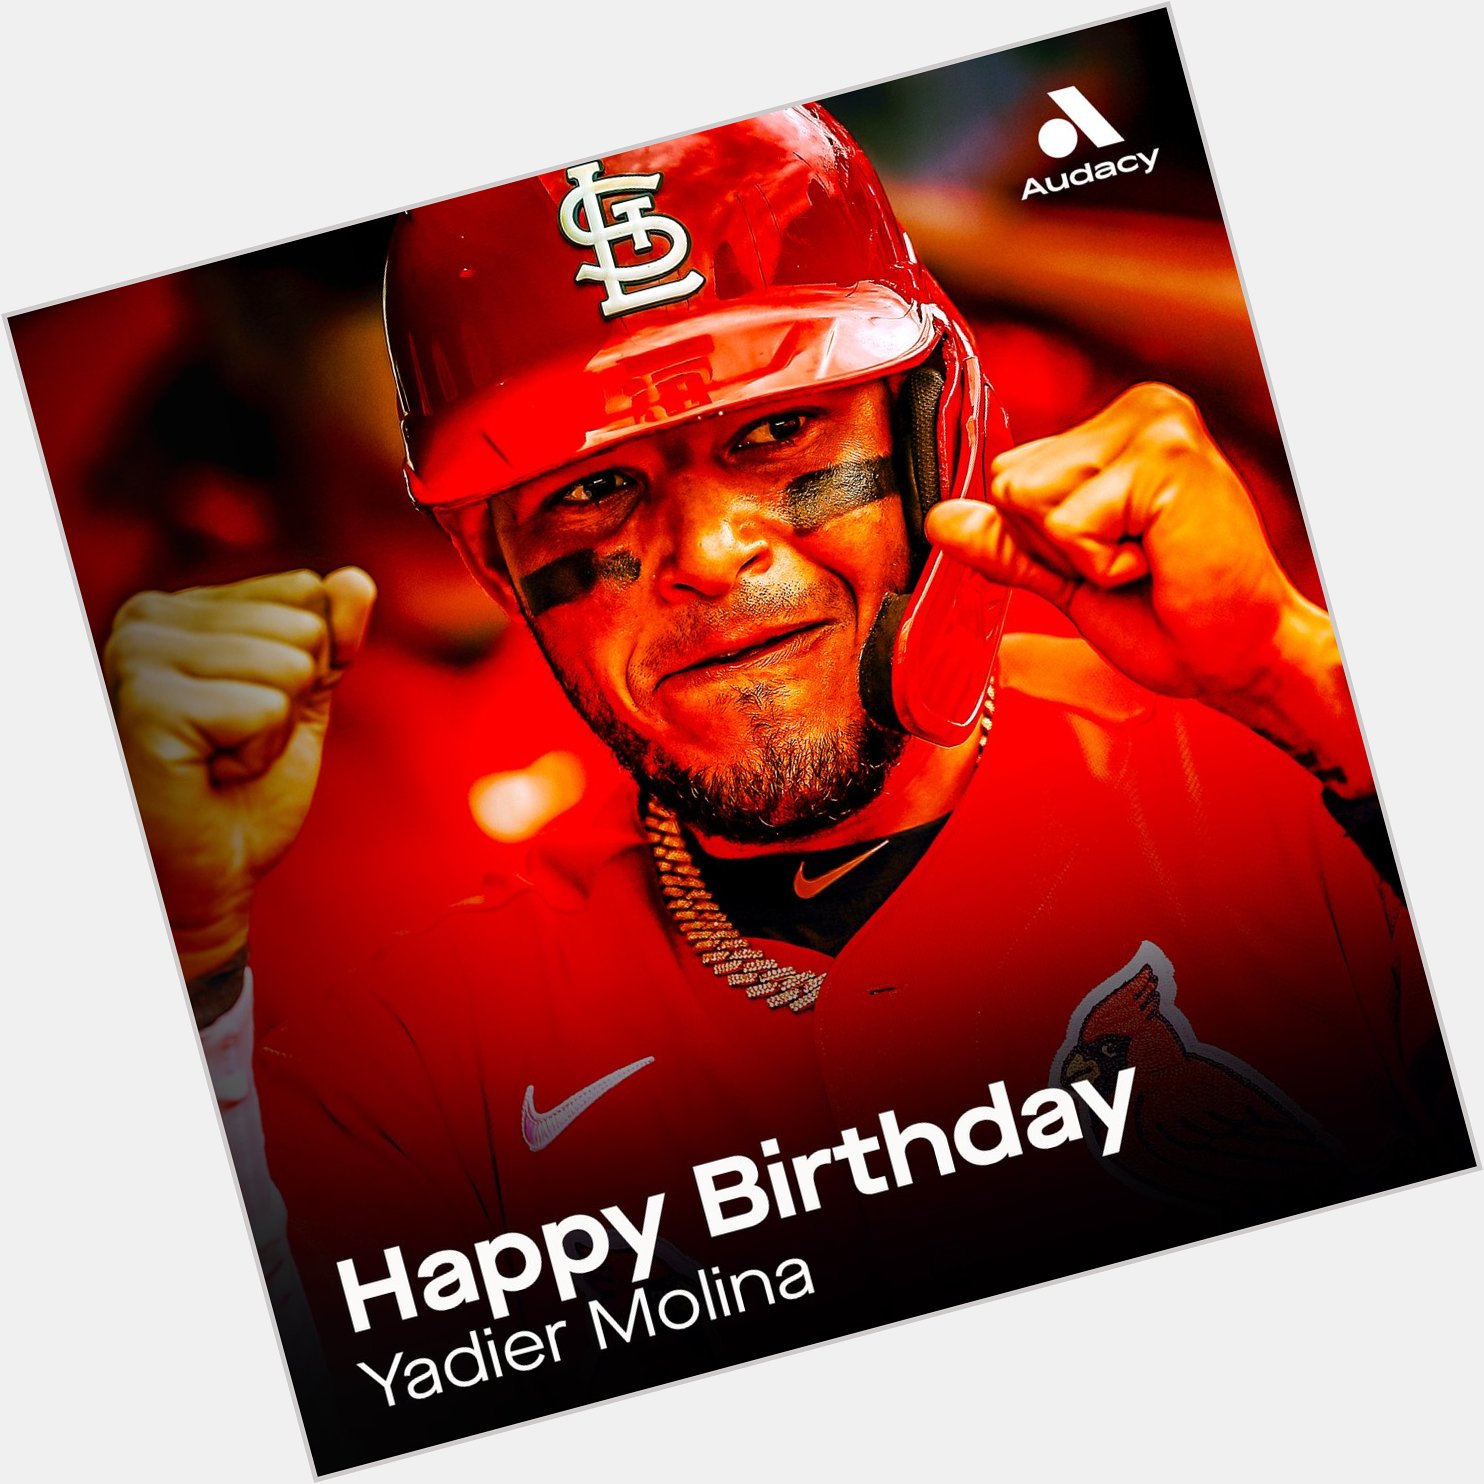 Happy birthday to 10x MLB All-Star Yadier Molina!  